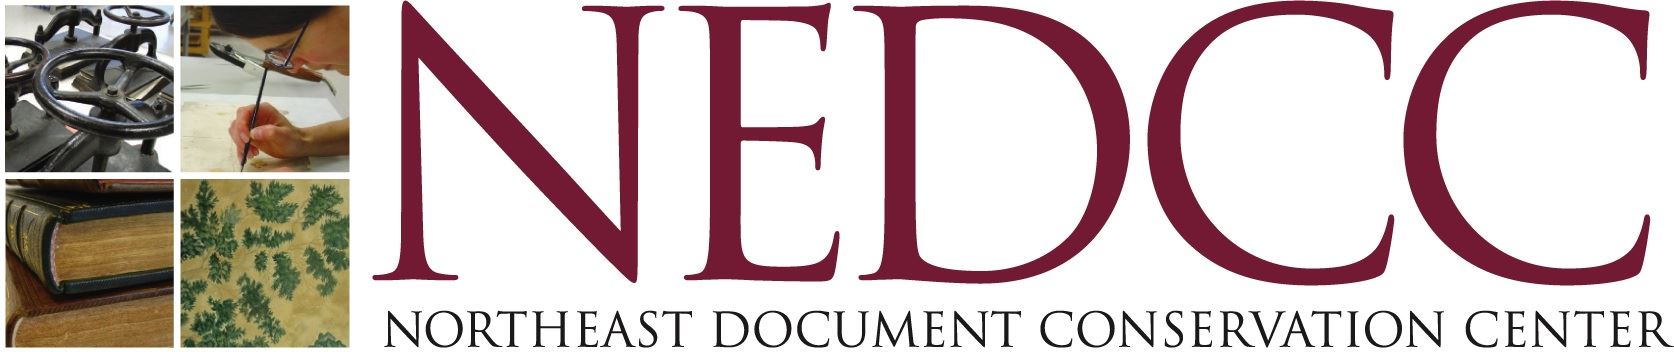 NEDCC: Northeast Document Conservation Center